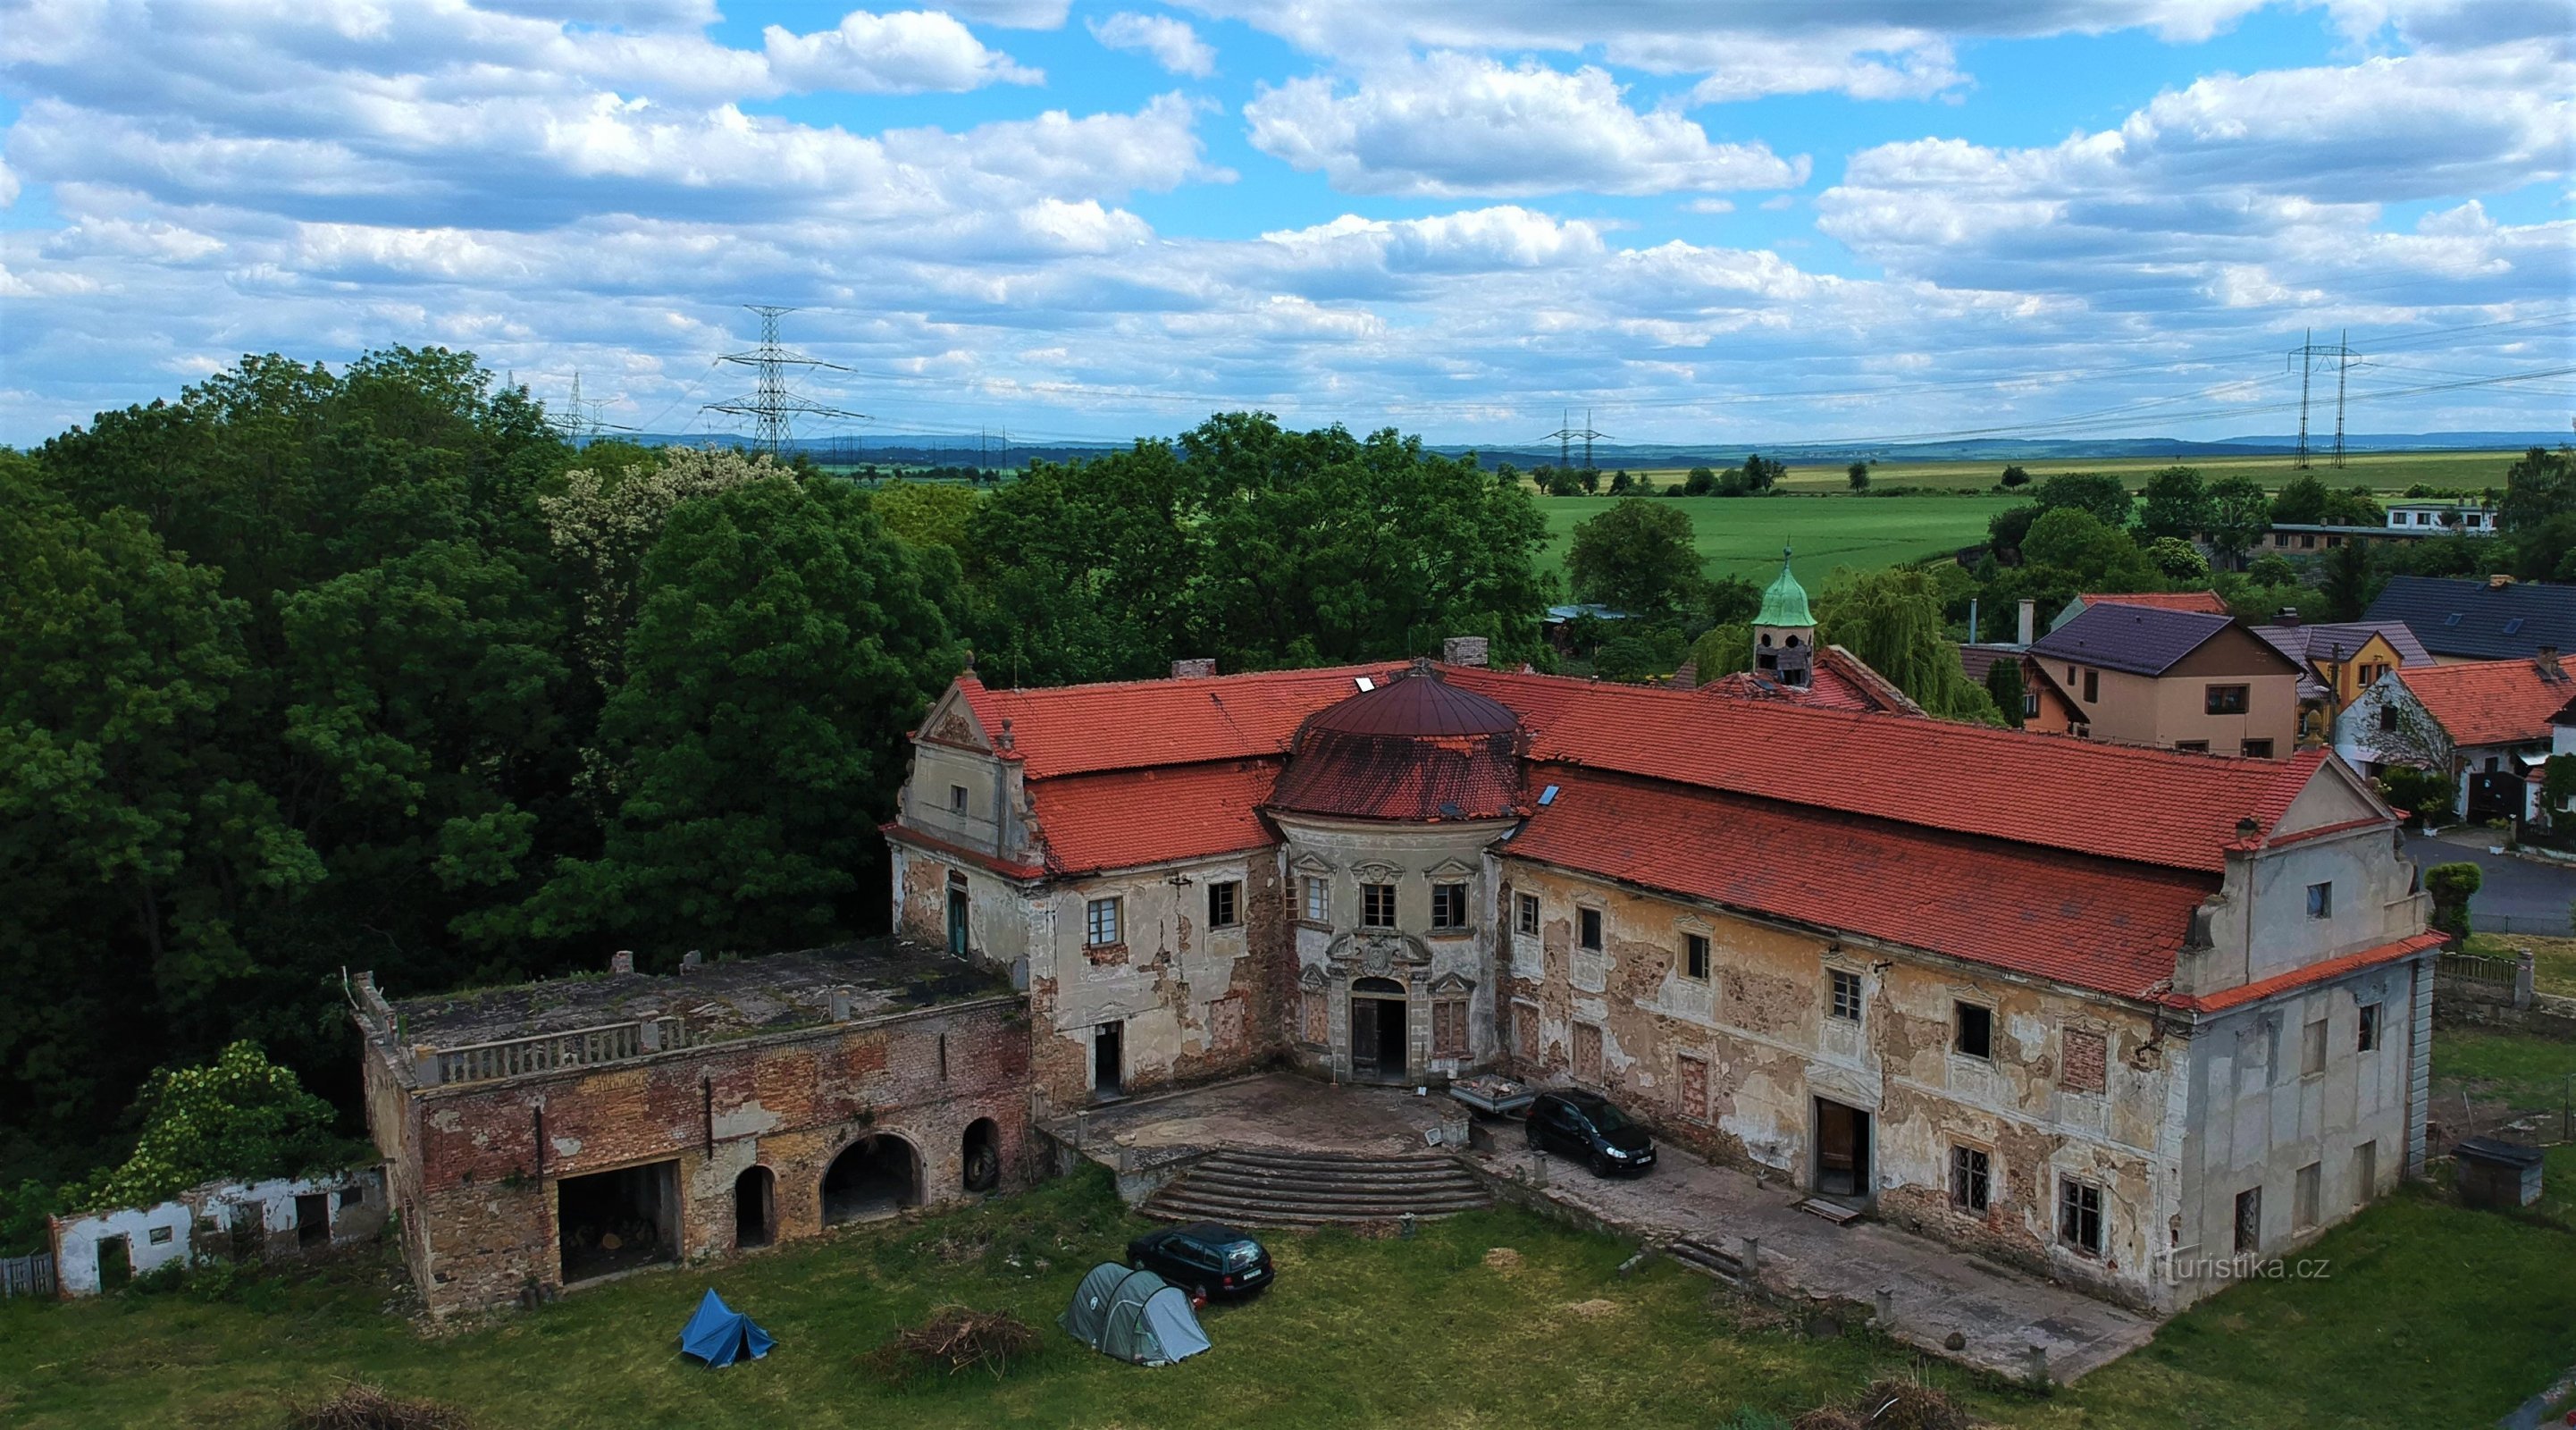 Poláky Castle - an awakening baroque pearl